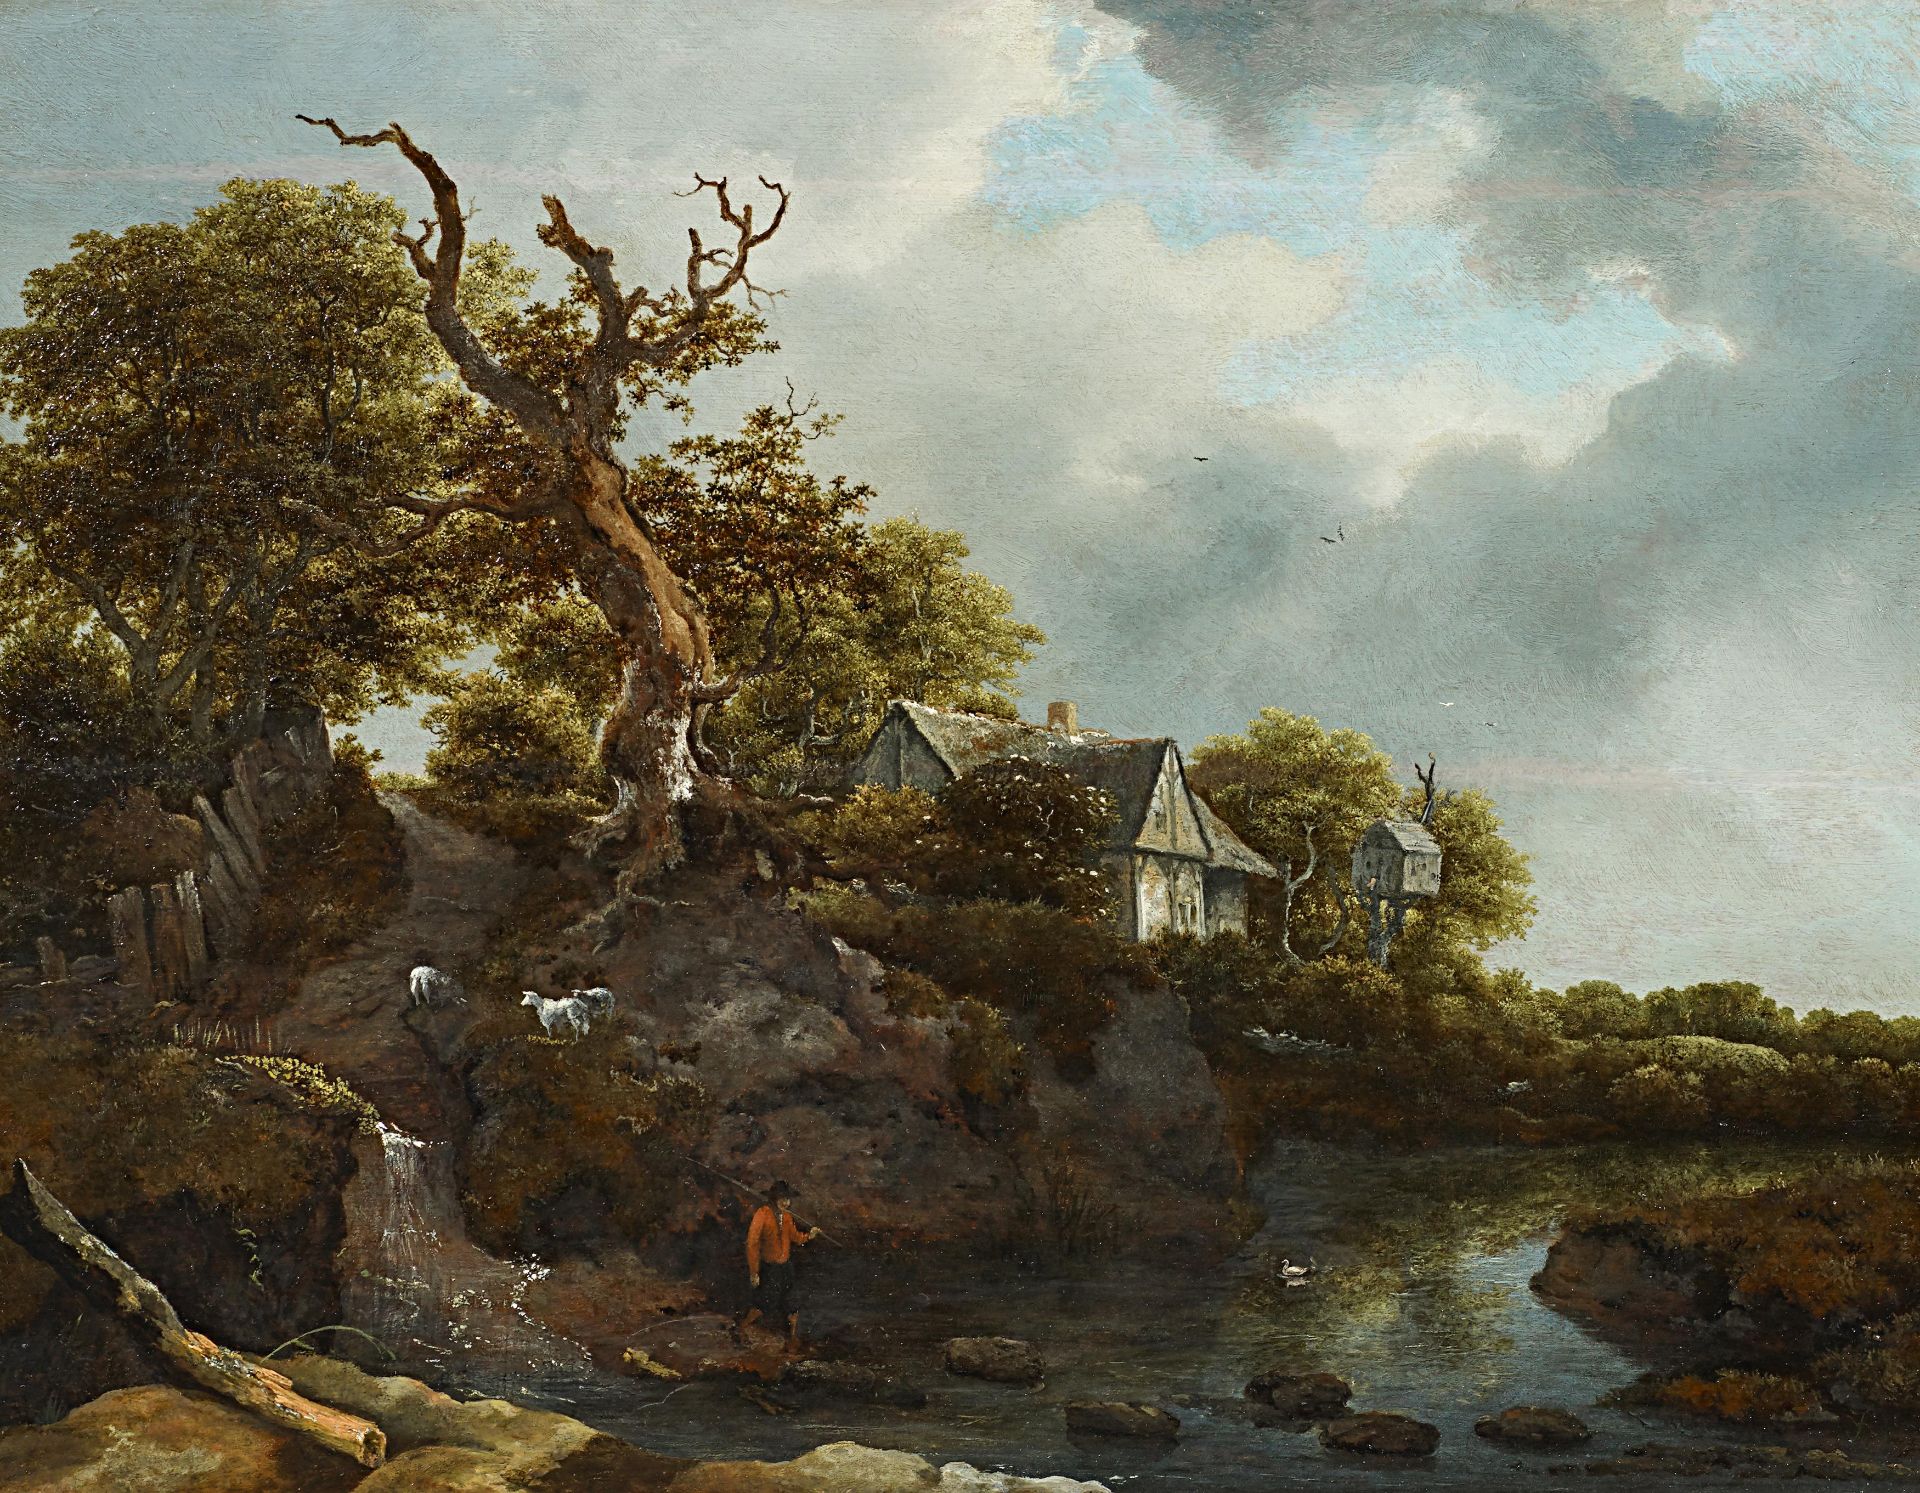 Ruisdael, Jakob Isaackszoon van Haarlem 1628/29 - 1682 Landschaft mit Haus und Taubenschlag. Öl